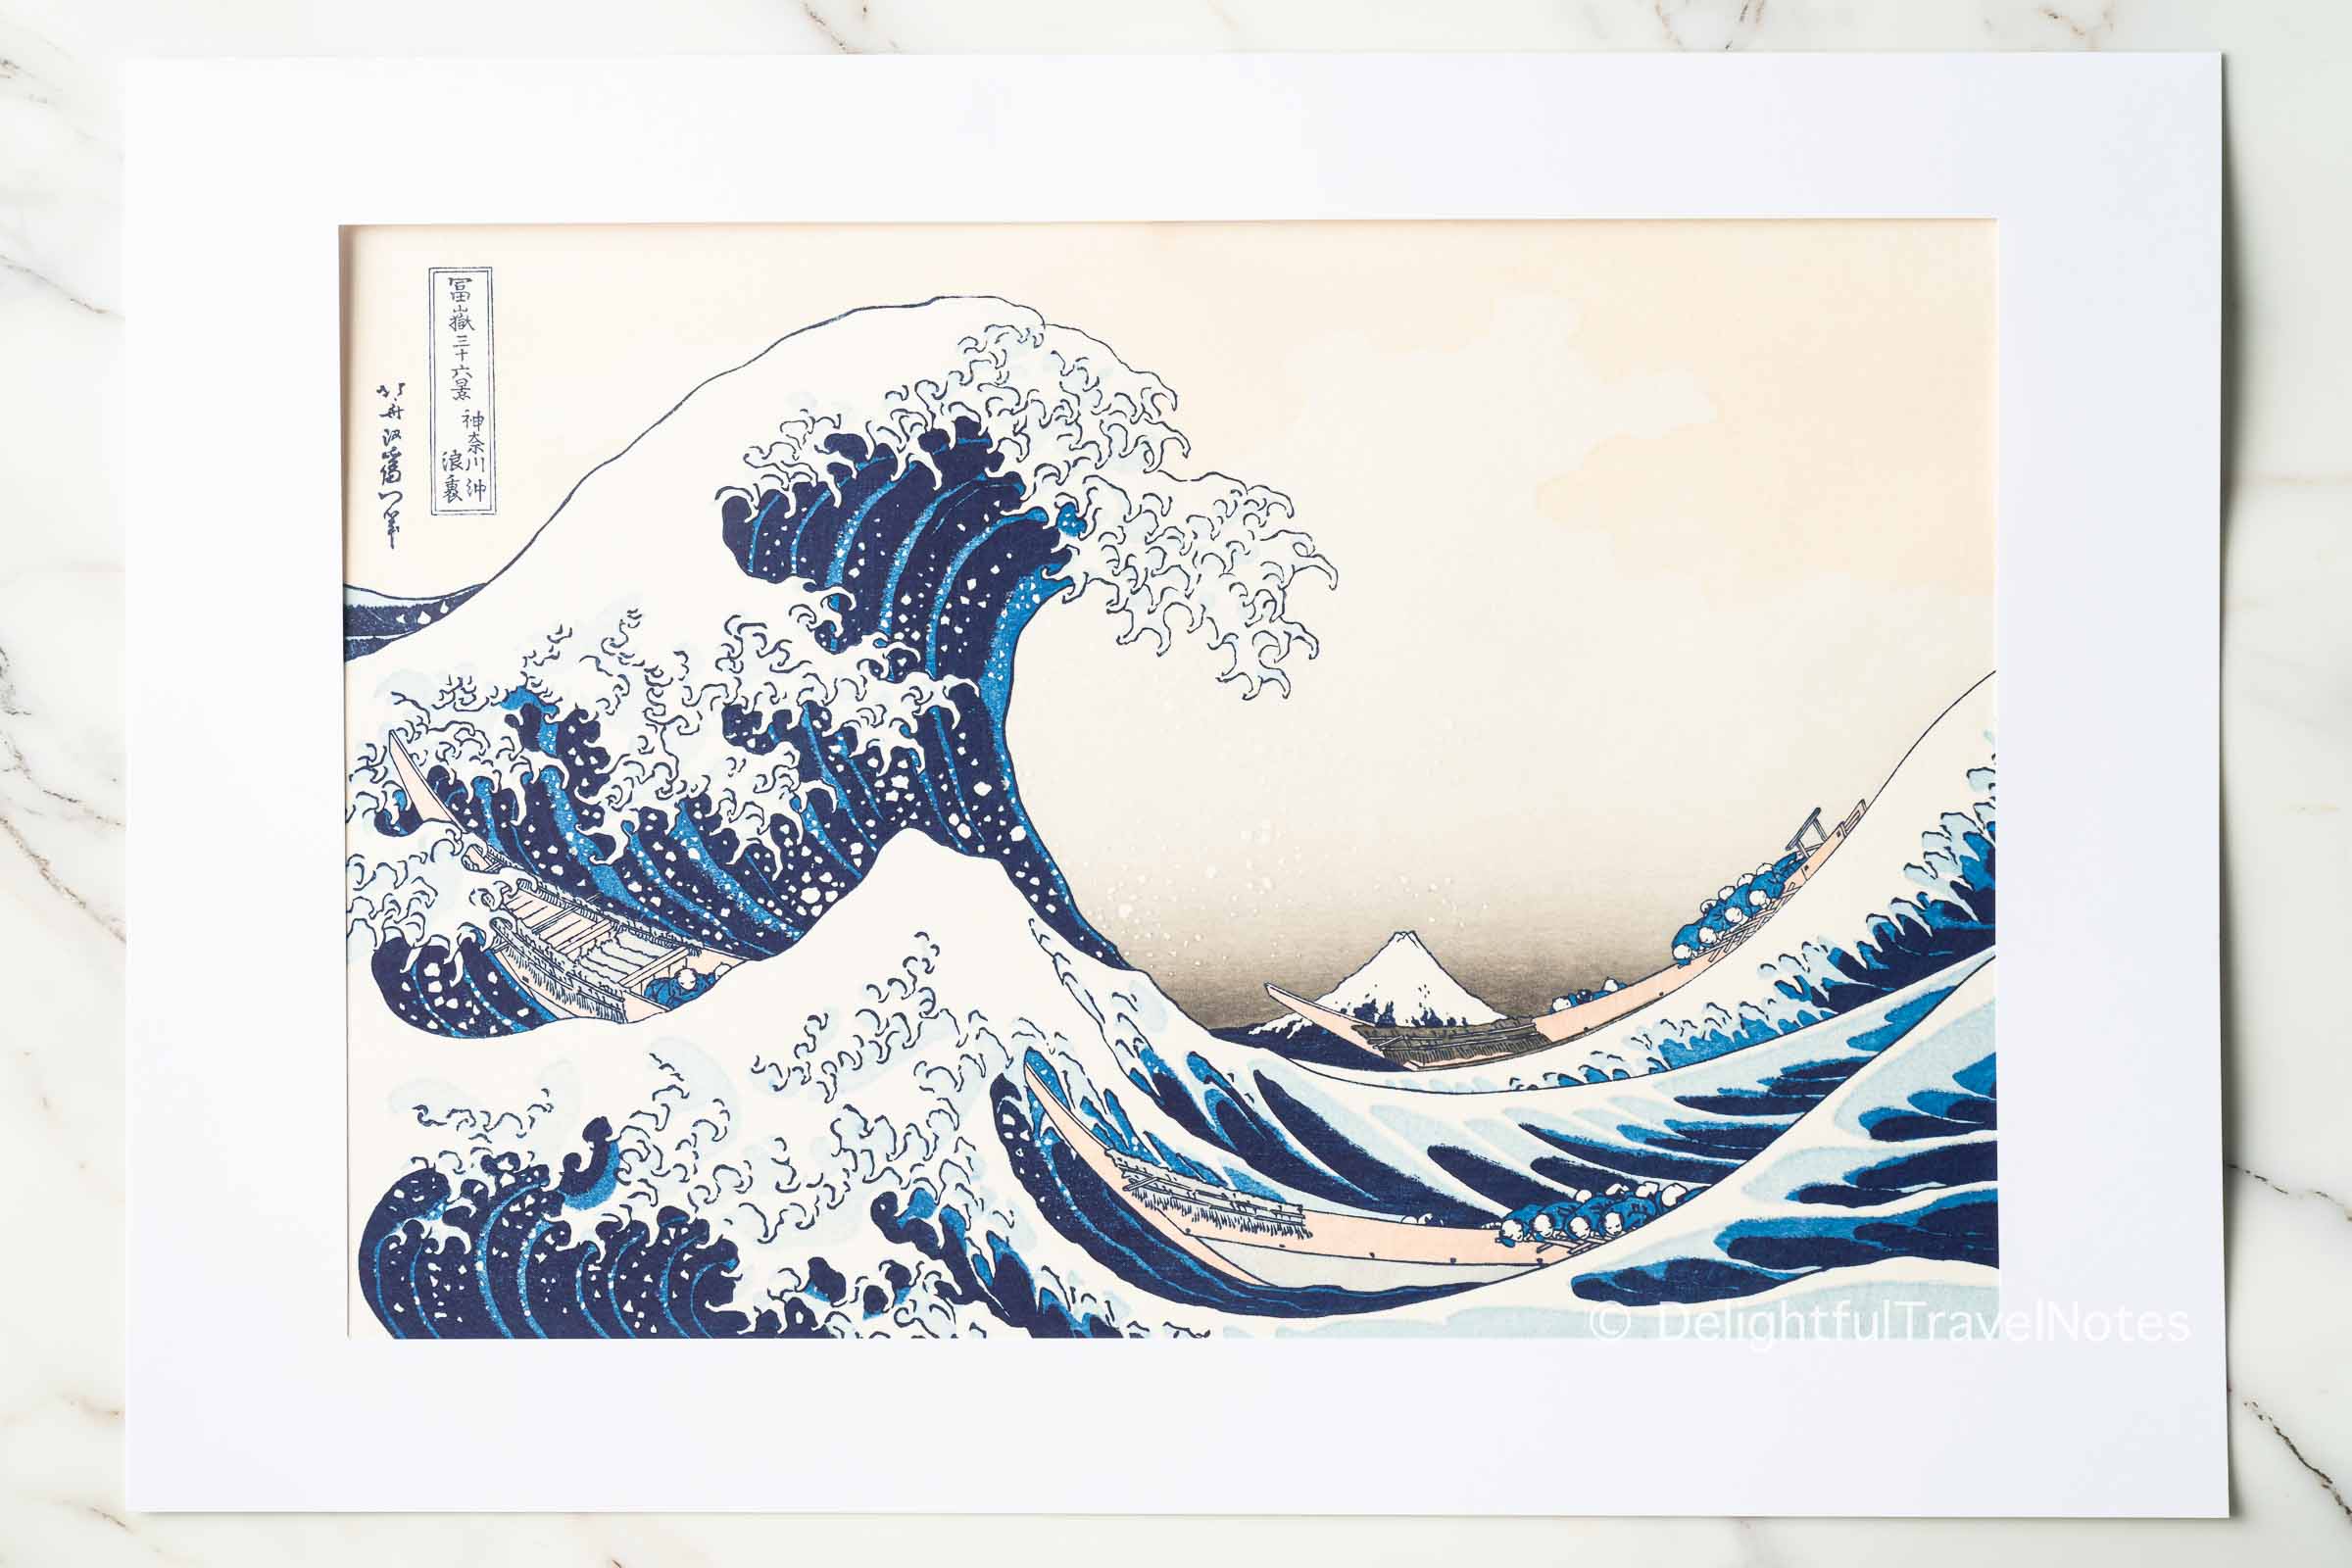 An ukiyo-e woodblock print from Japan.